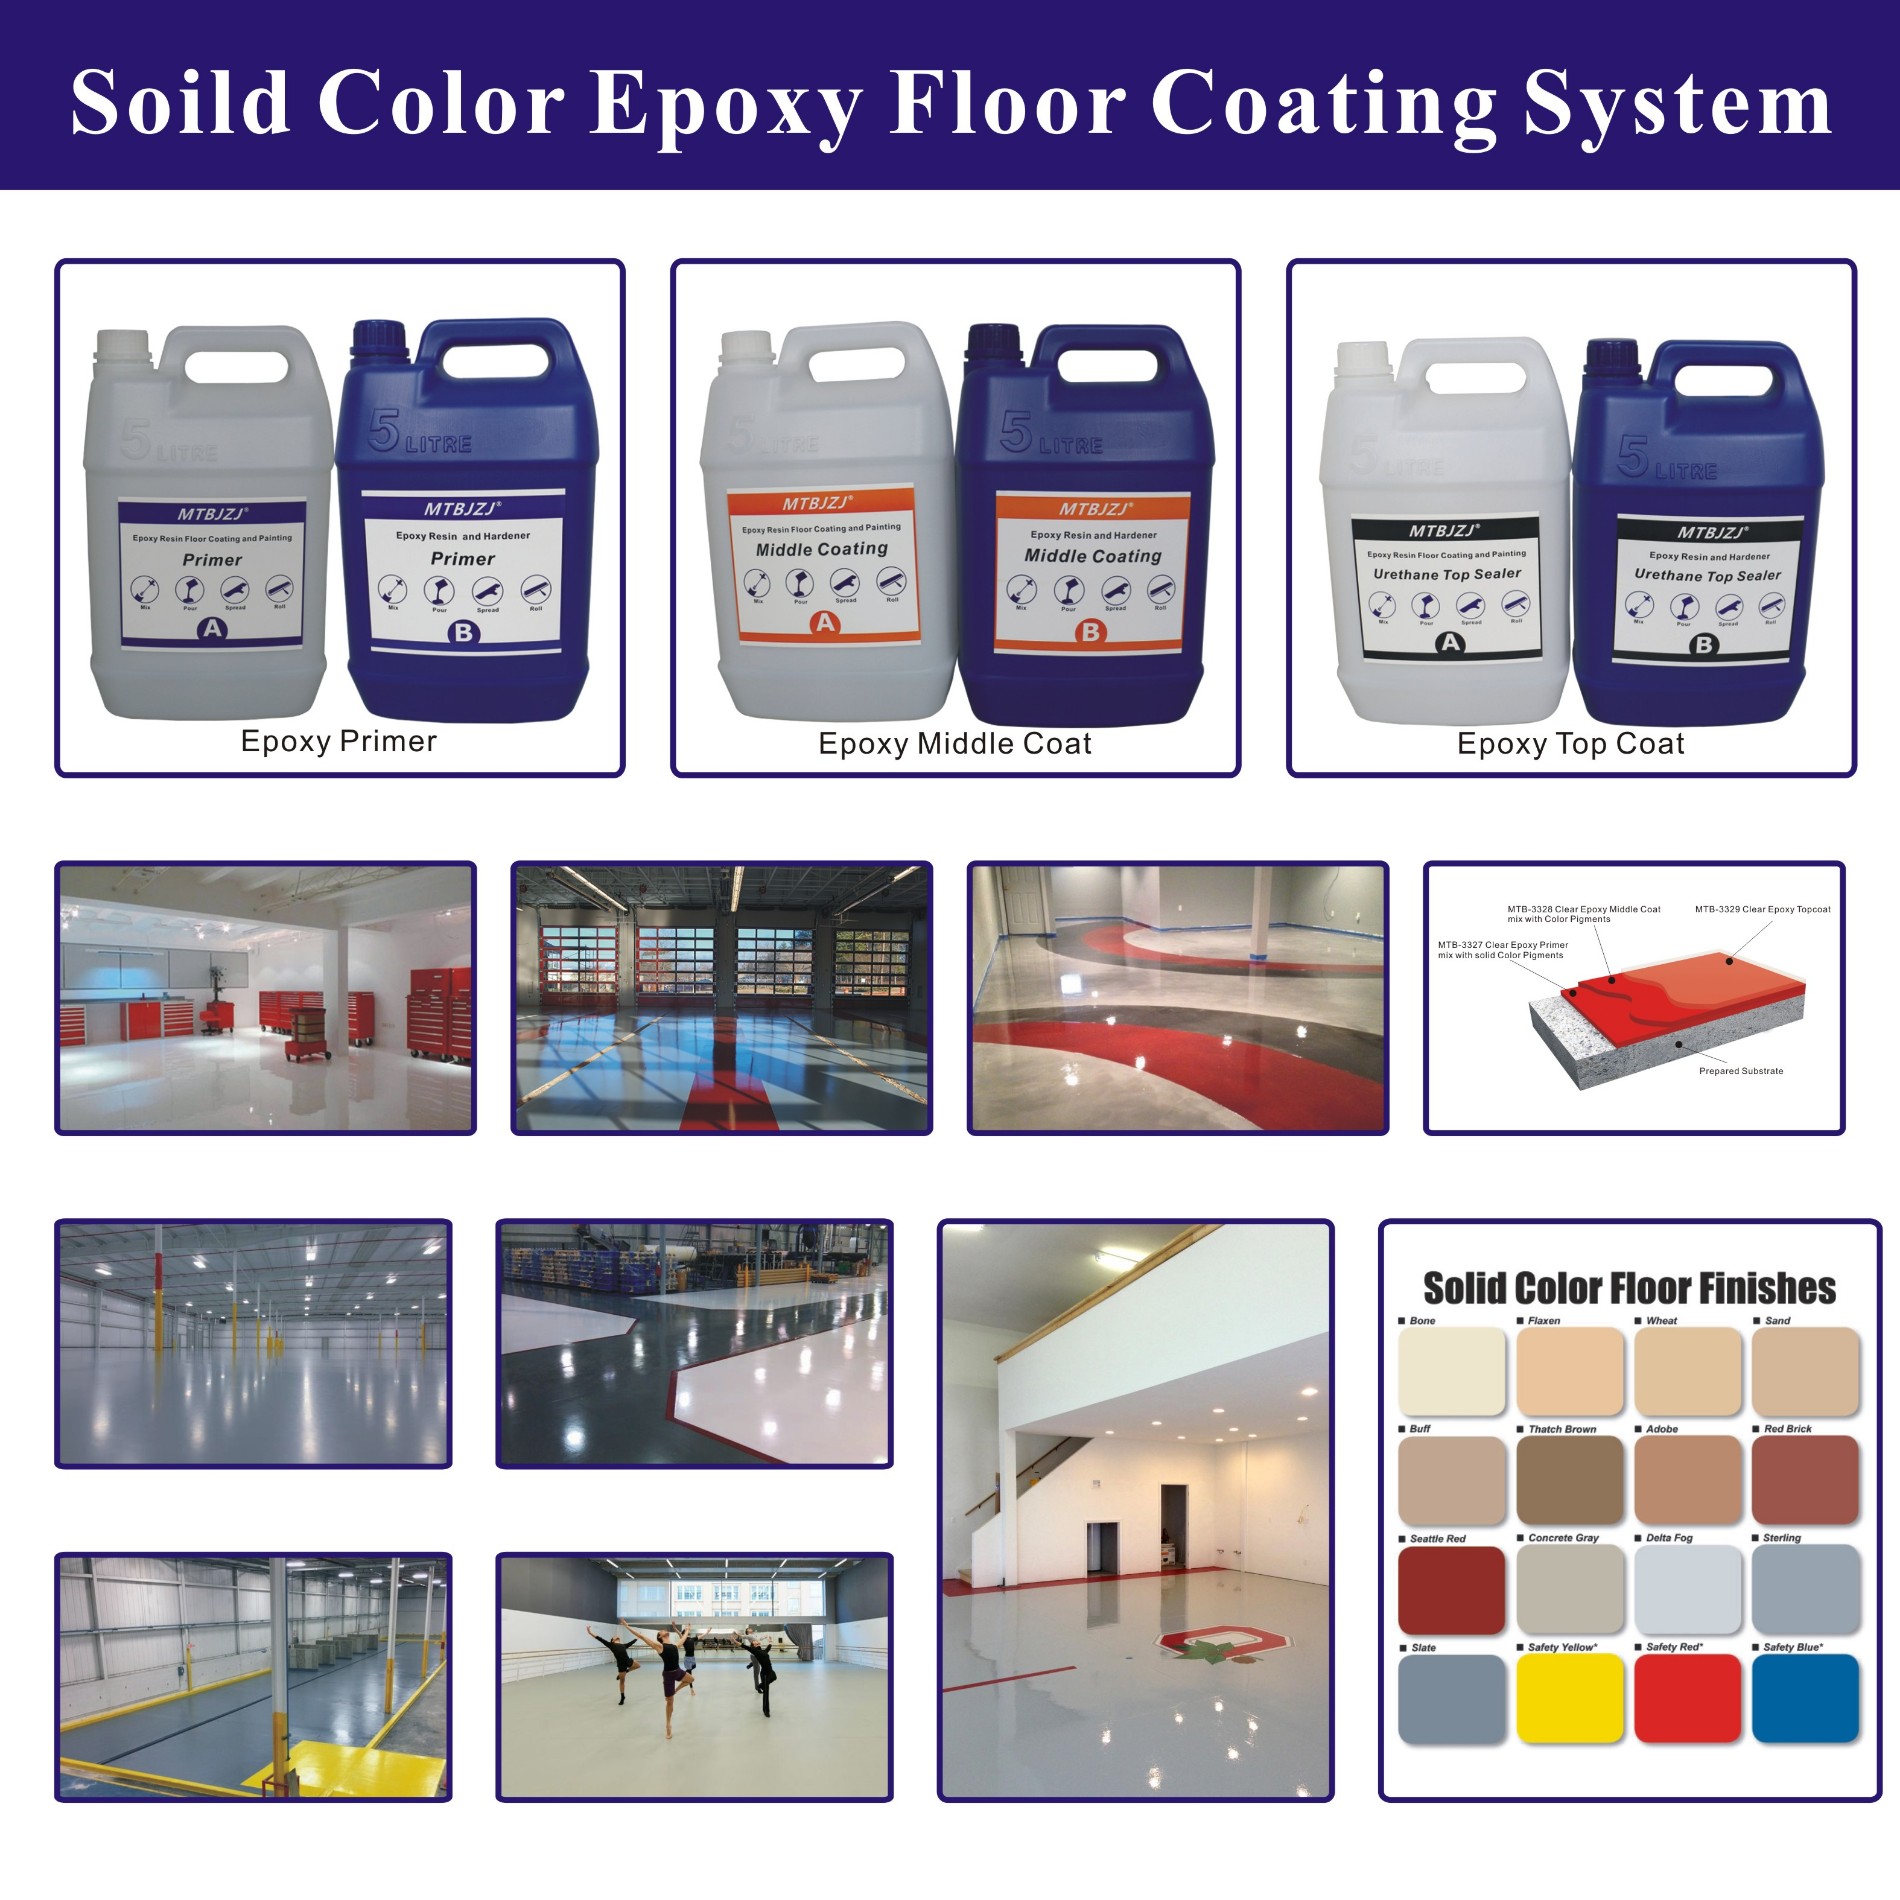 Solid Color Epoxy Floor Coating